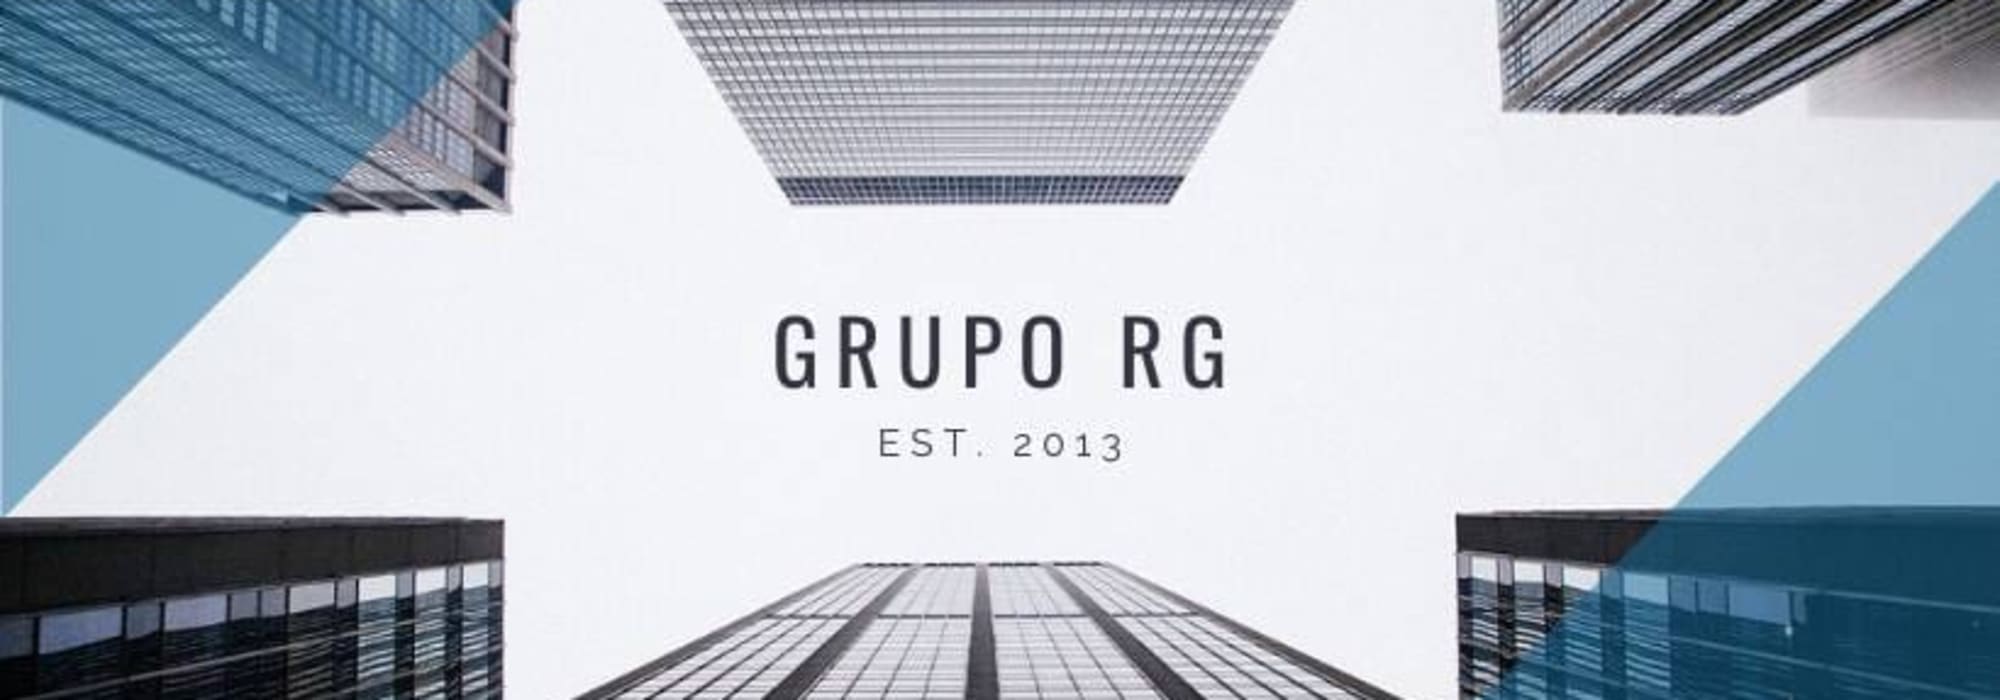 Grupo RG